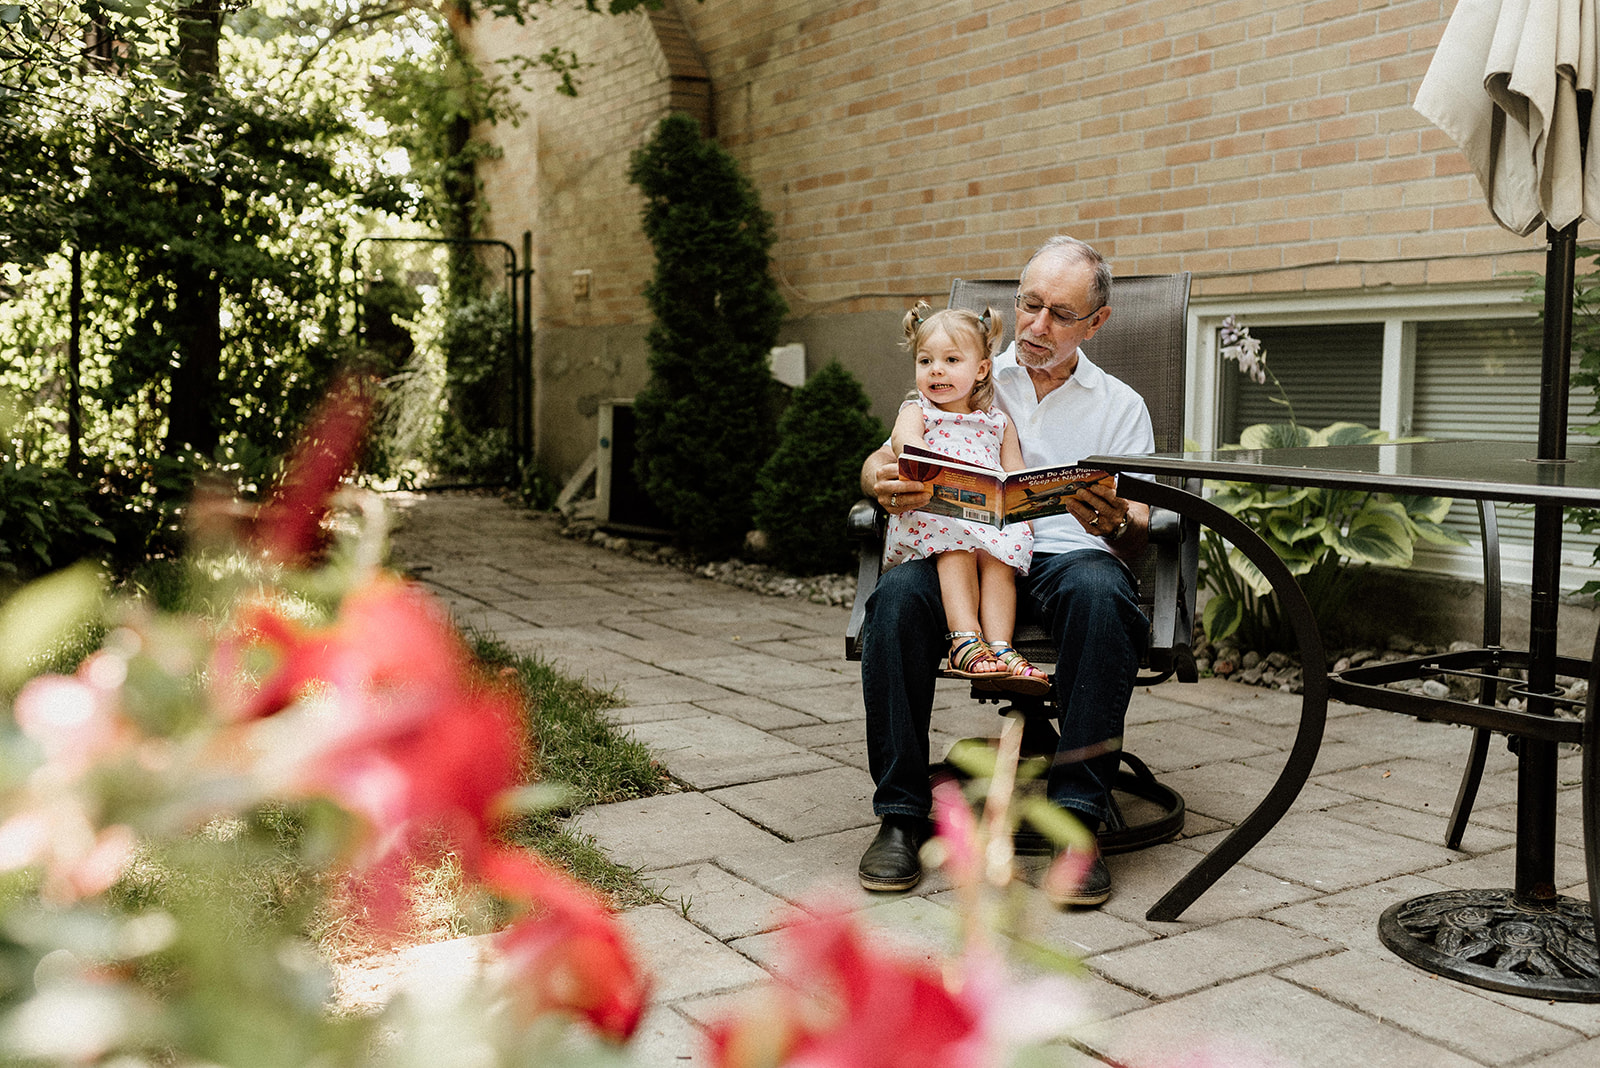 Grandpapa reading story book for her granddaughter in the backyard